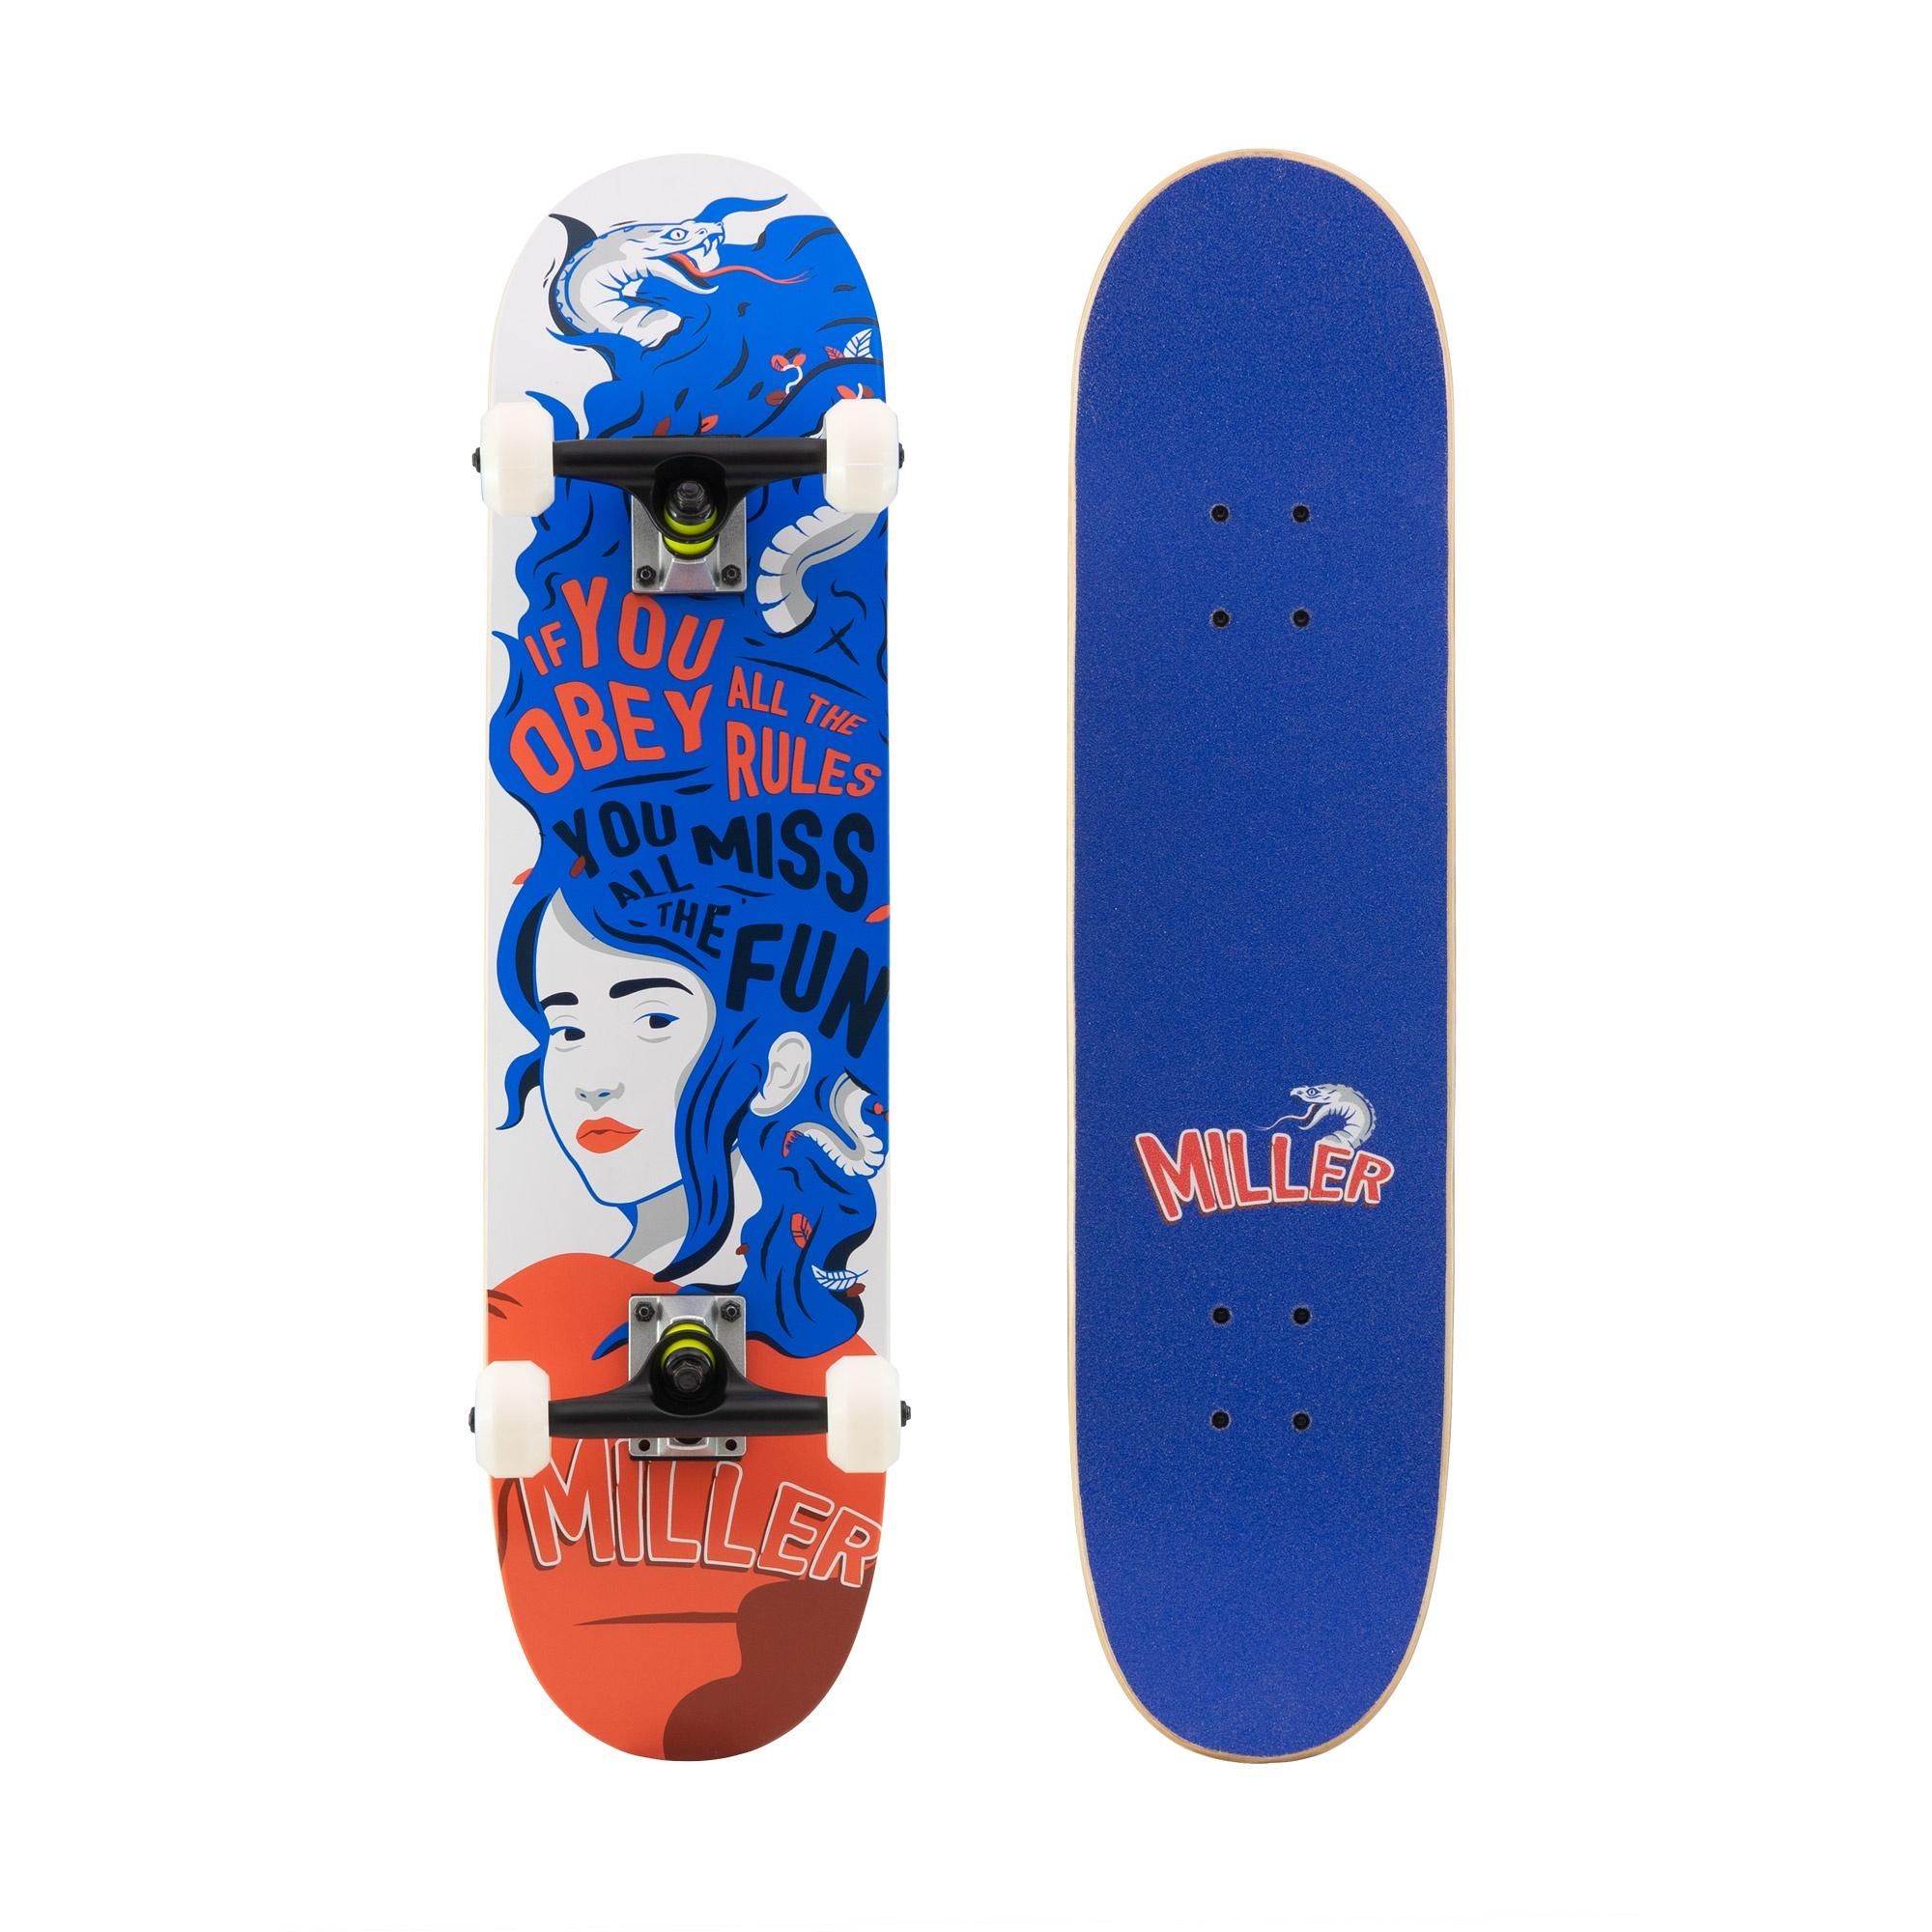 Skateboard Completo Miller Fun Arce 31,5"x8" Abec7 Ruedas Creek Shr 53mm - azul - 